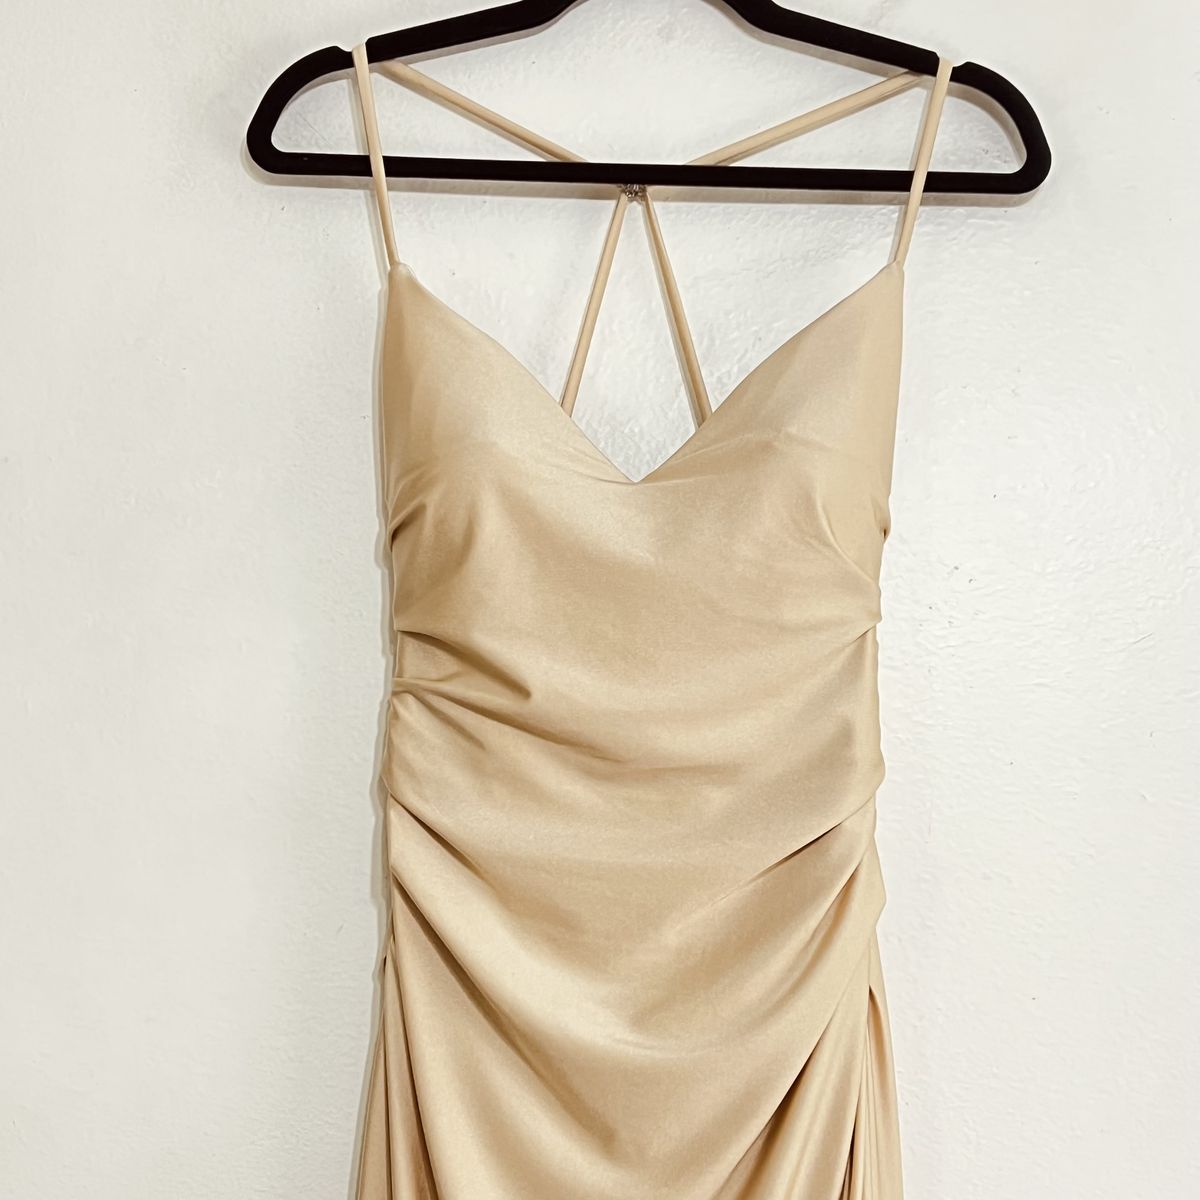 Style 28206 La Femme Size 4 Nude Side Slit Dress on Queenly